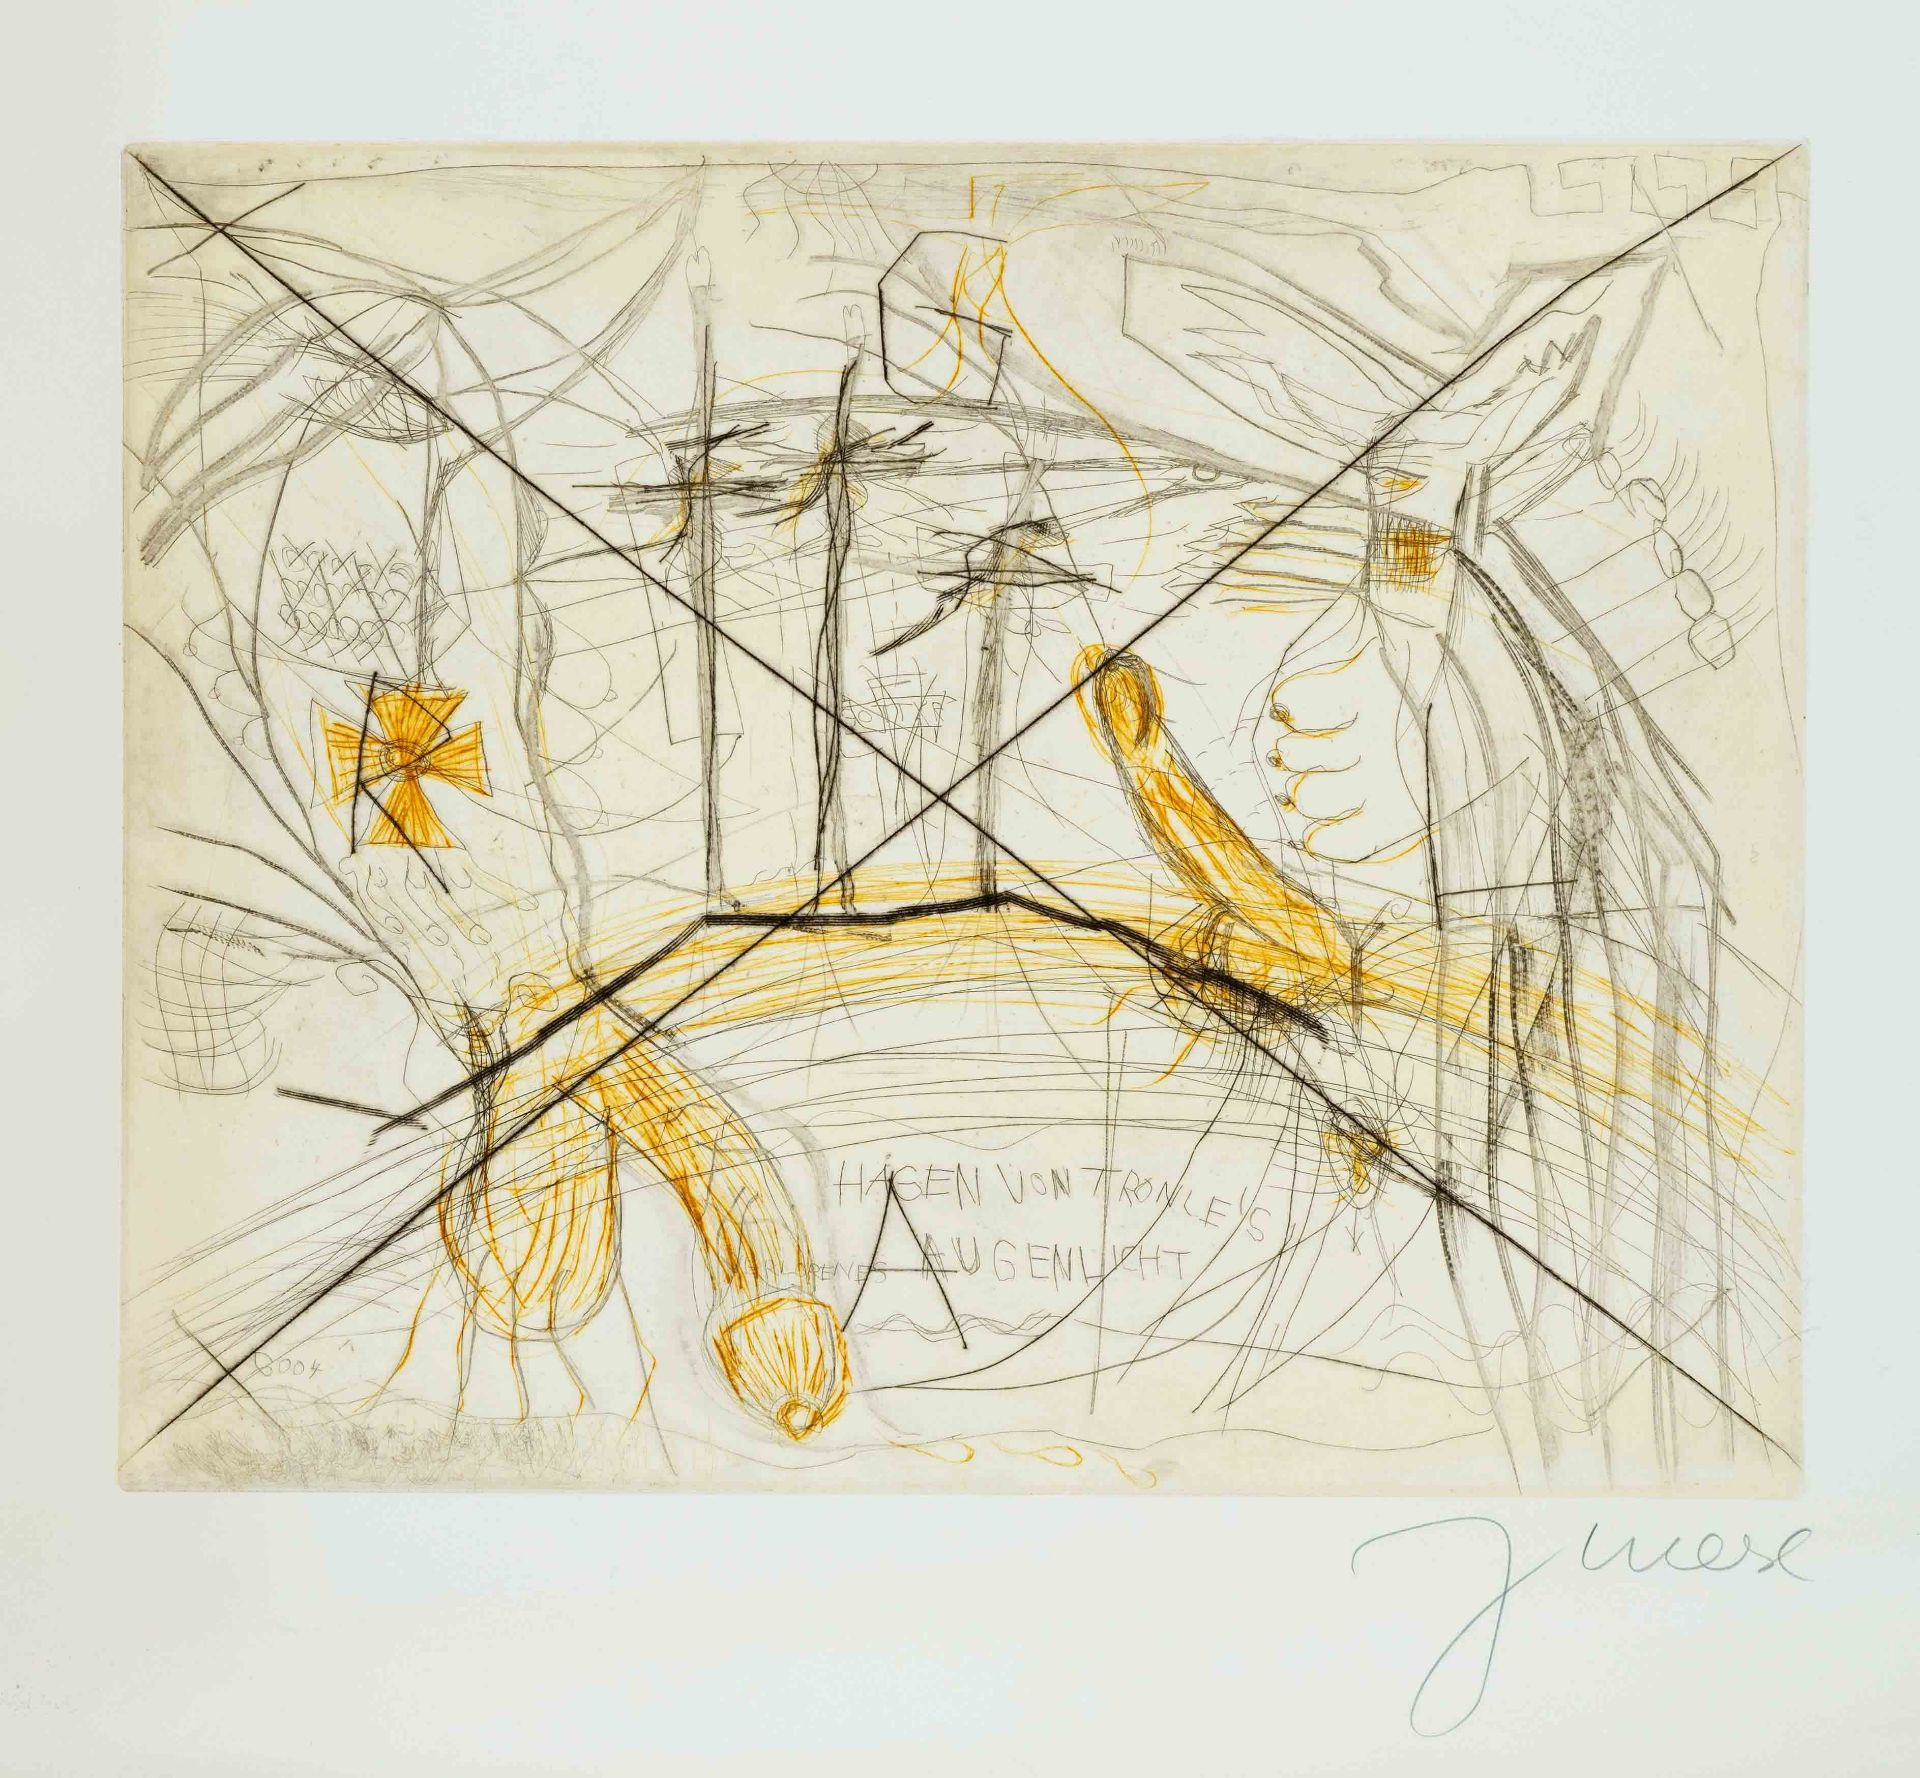 Jonathan Meese (*1970), ''Hagen von Tronjes verlorenes Augenlicht'', color etching on laid paper,